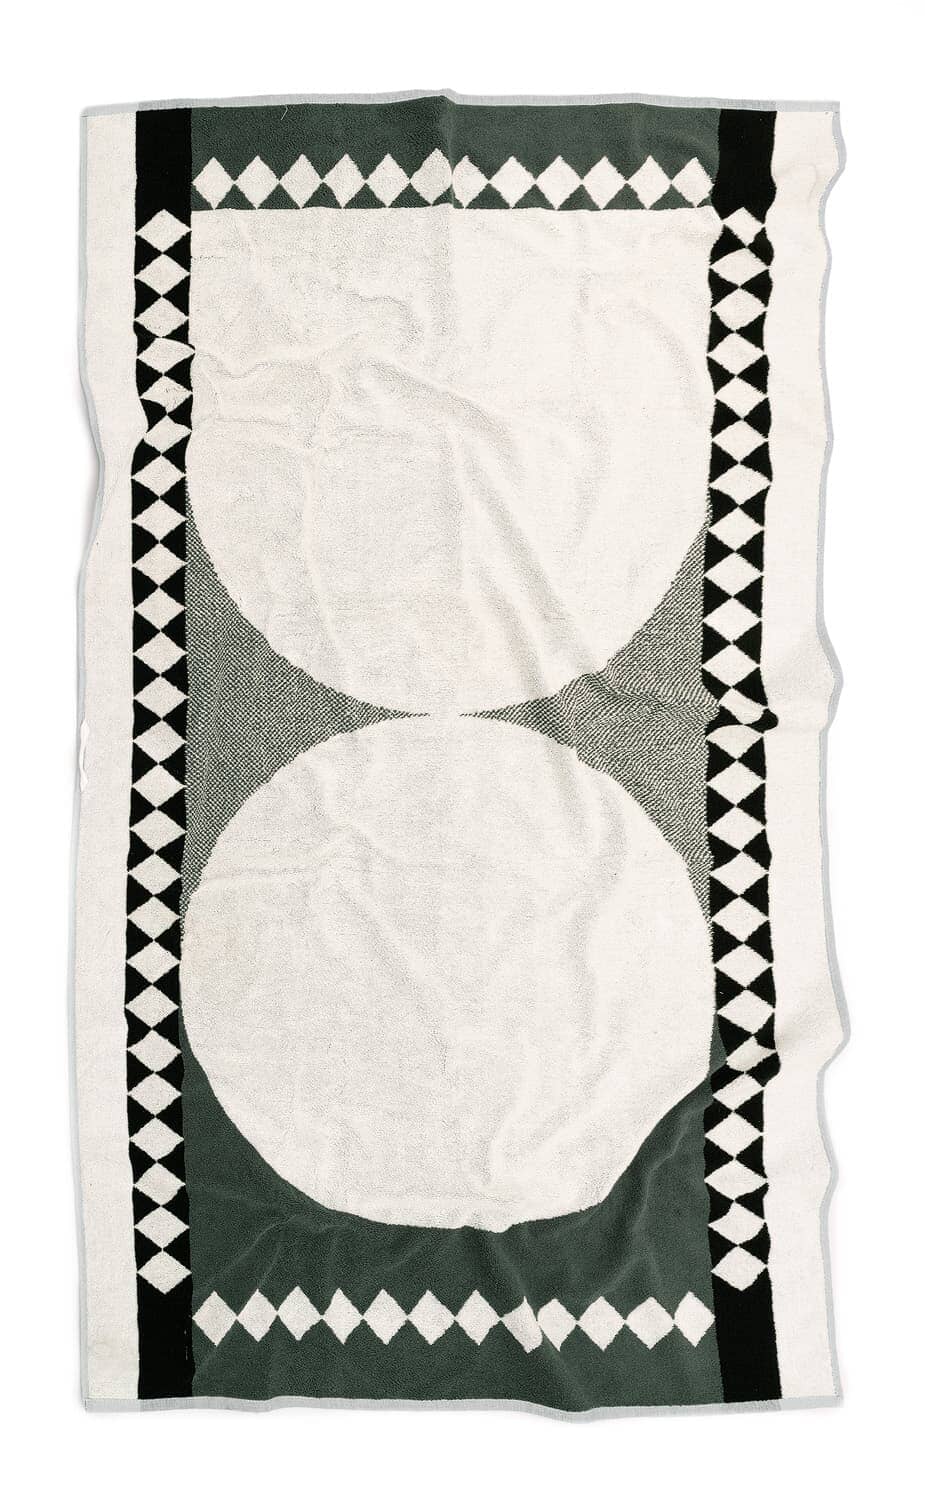 Studio image of back of diamond green beach towel